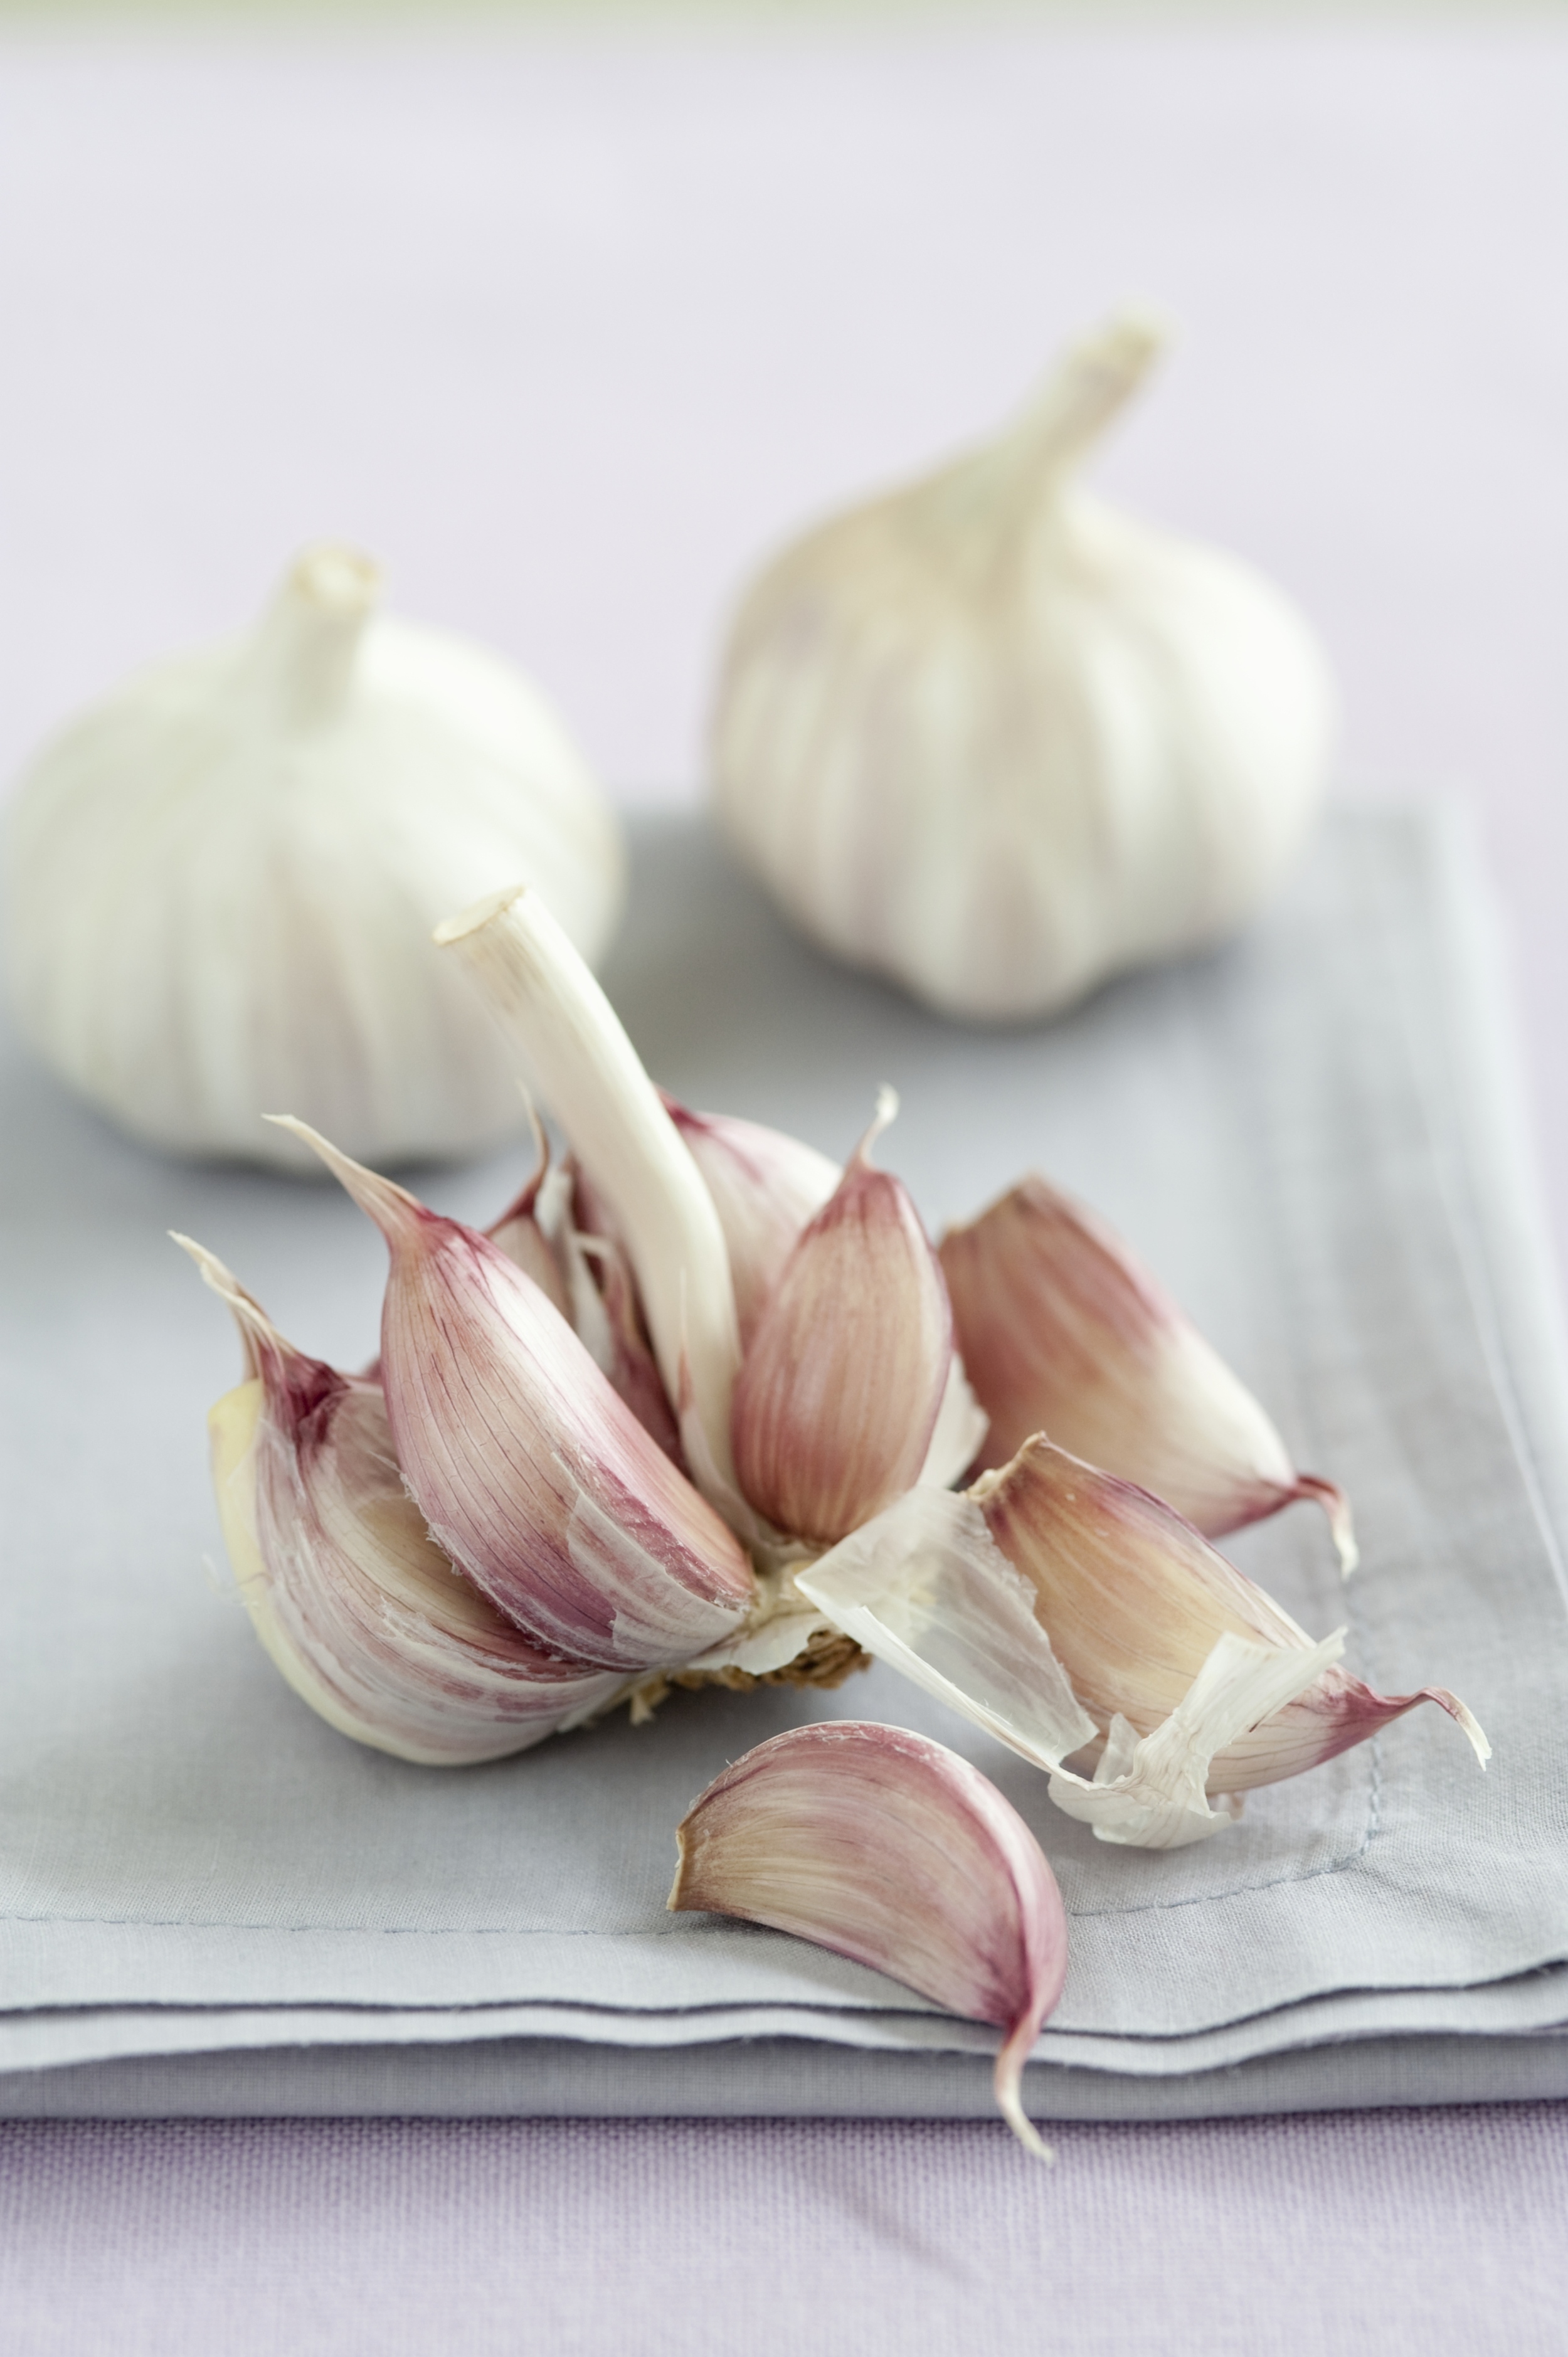 Whole Garlic Cloves